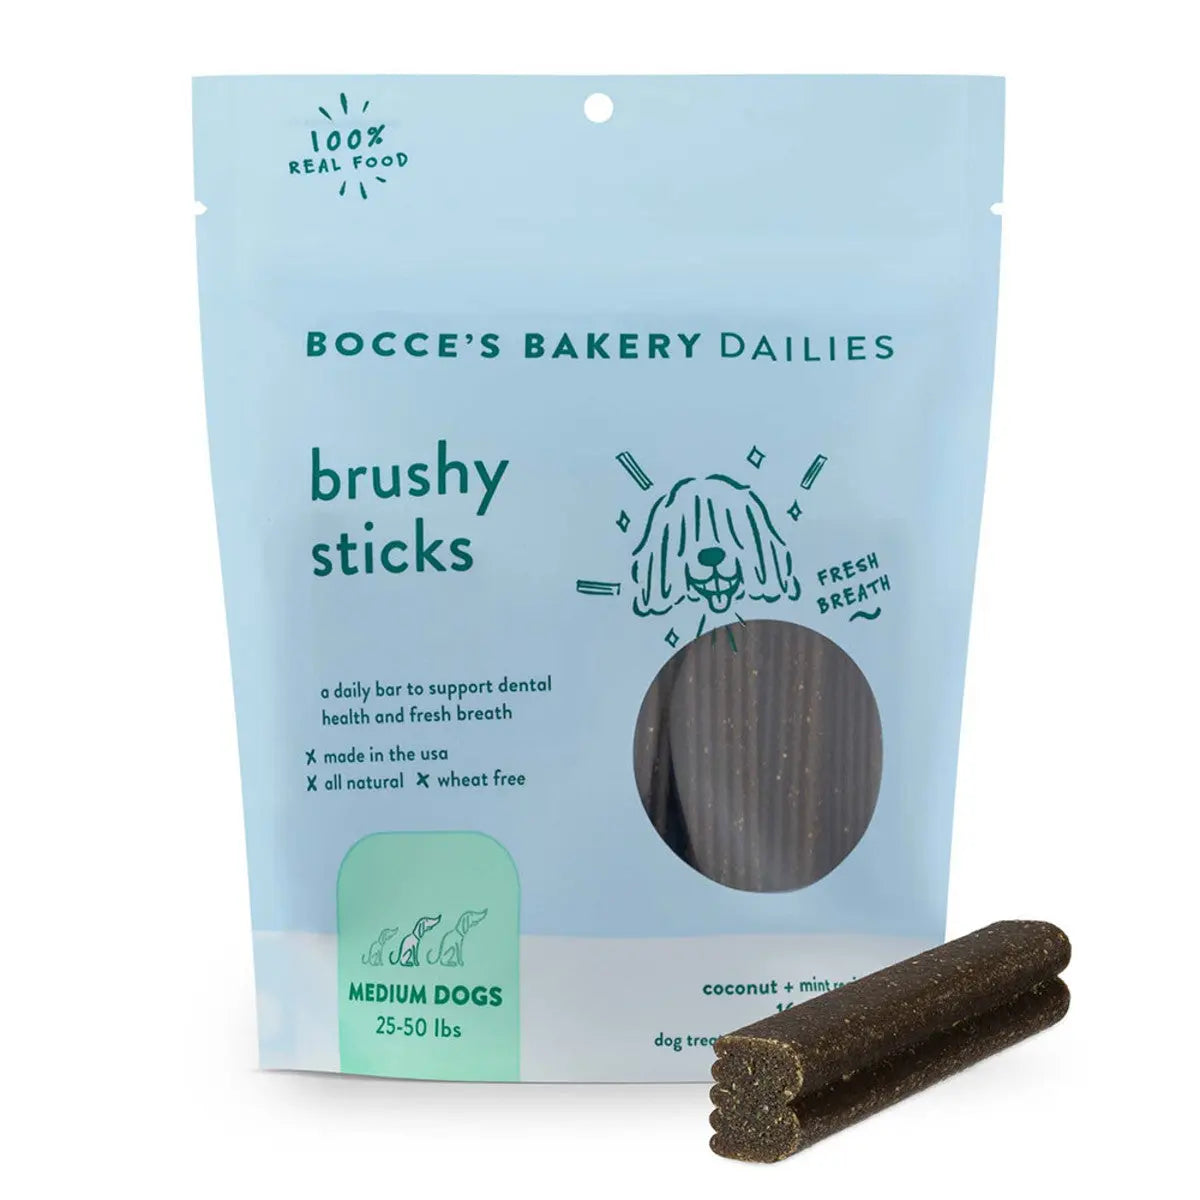 Bocce's Bakery Dailies 13oz Brushy Sticks Medium Dog Dental Treats Bocce's Bakery